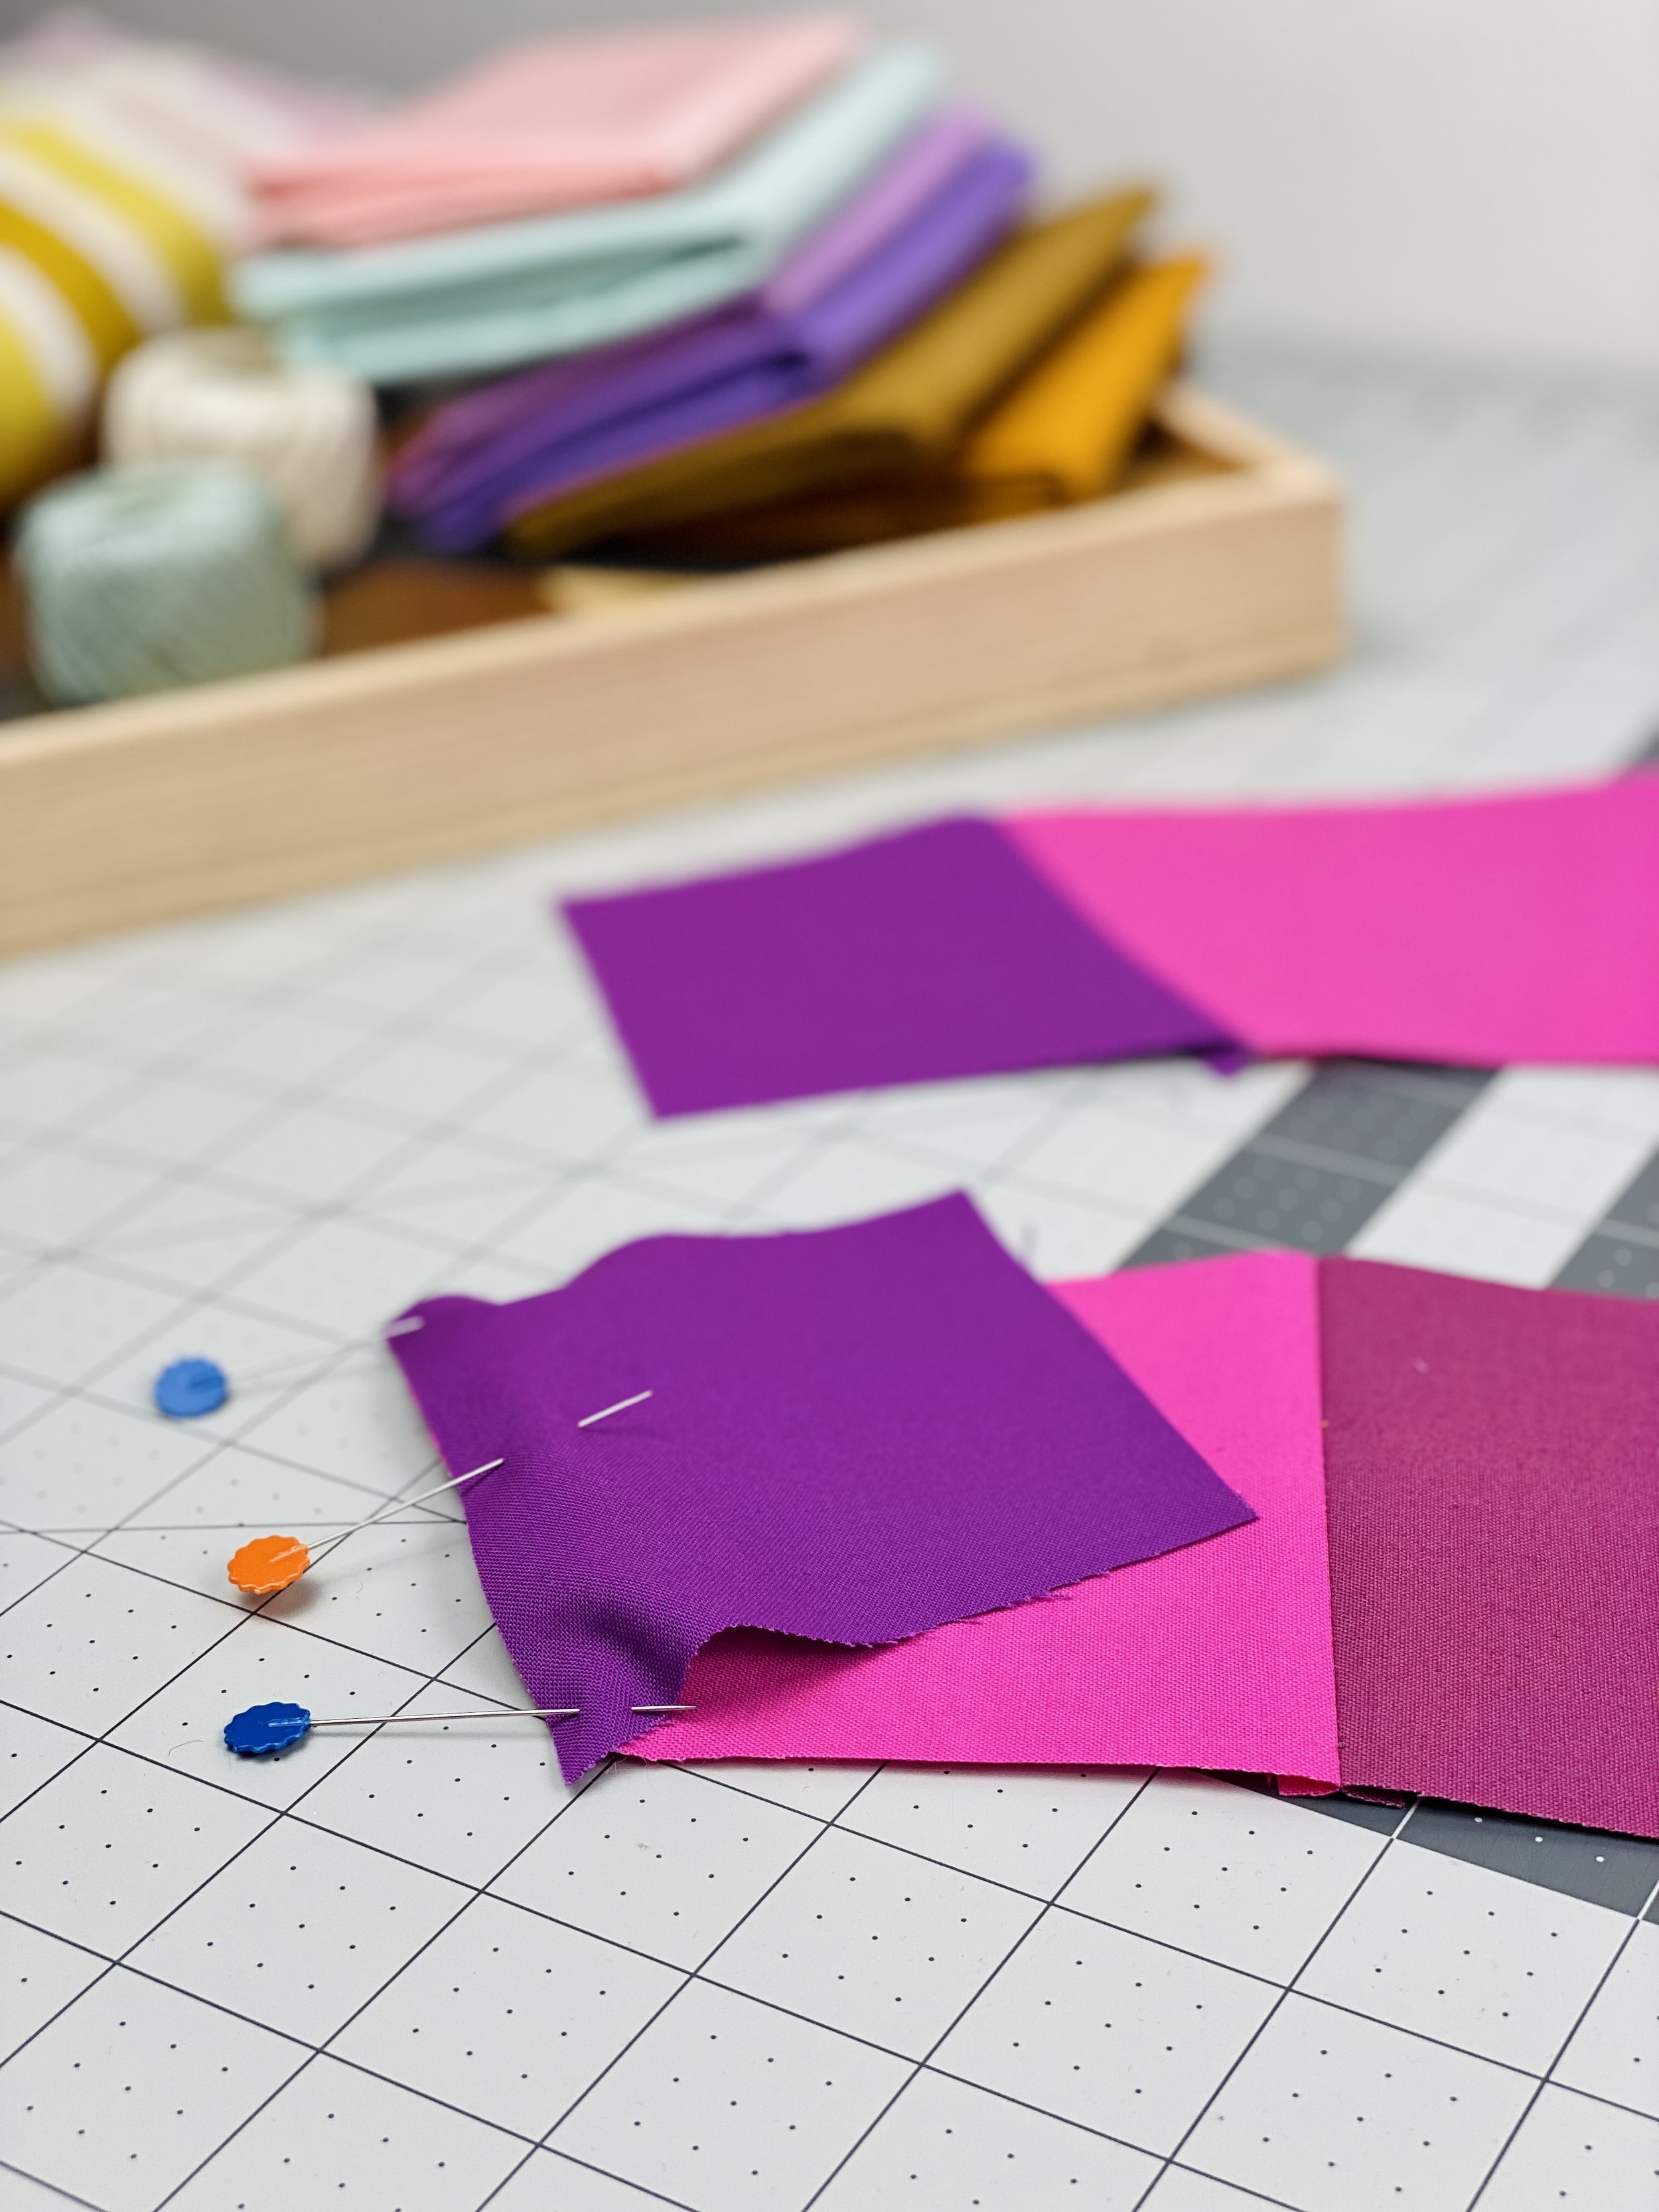 Make a simple paper kite